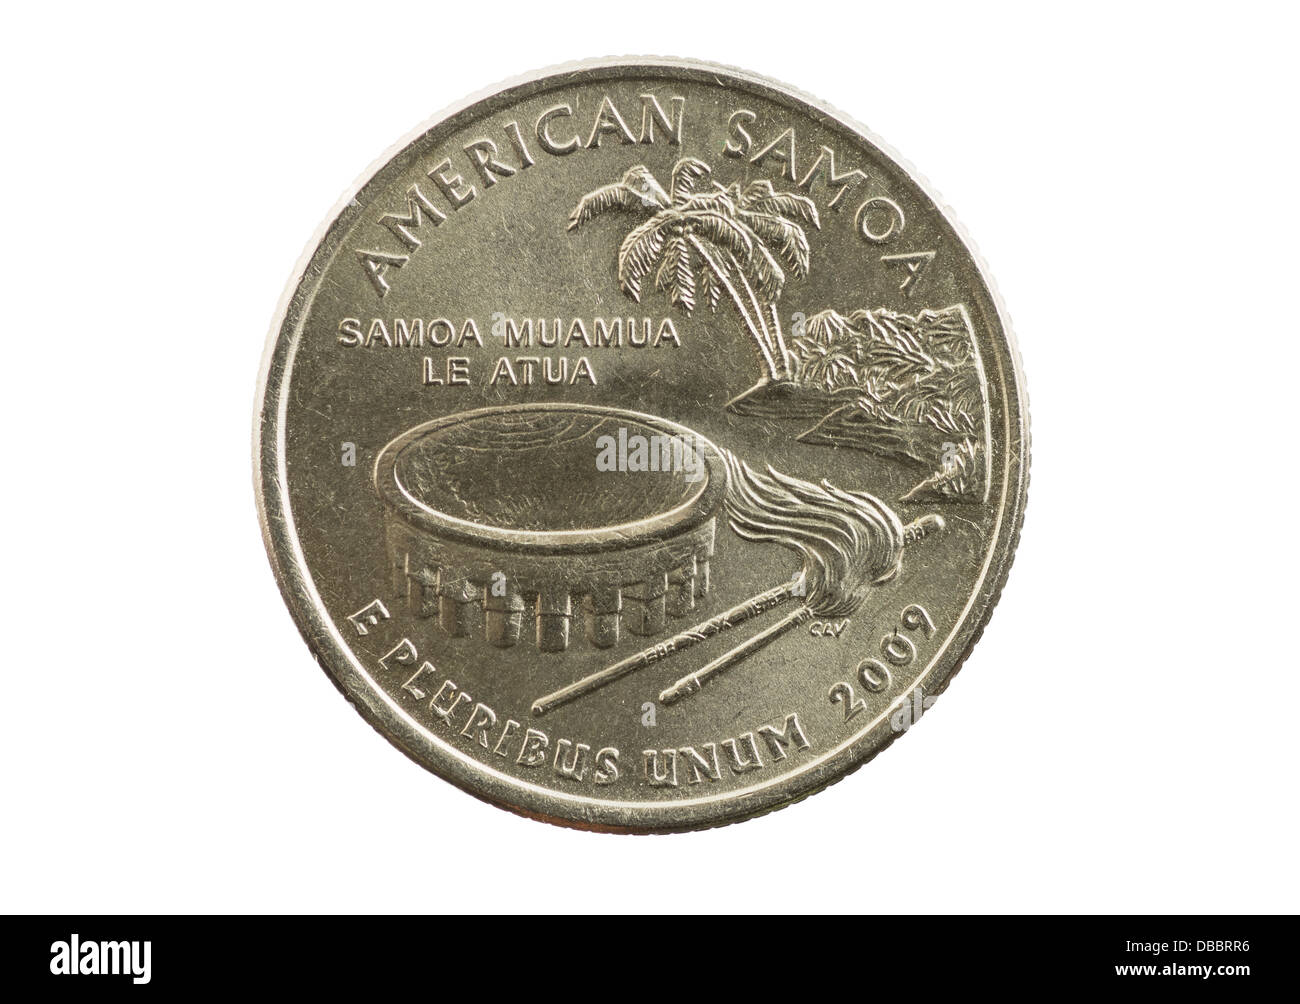 American Samoa commemorative quarter coin isolated on white Stock Photo